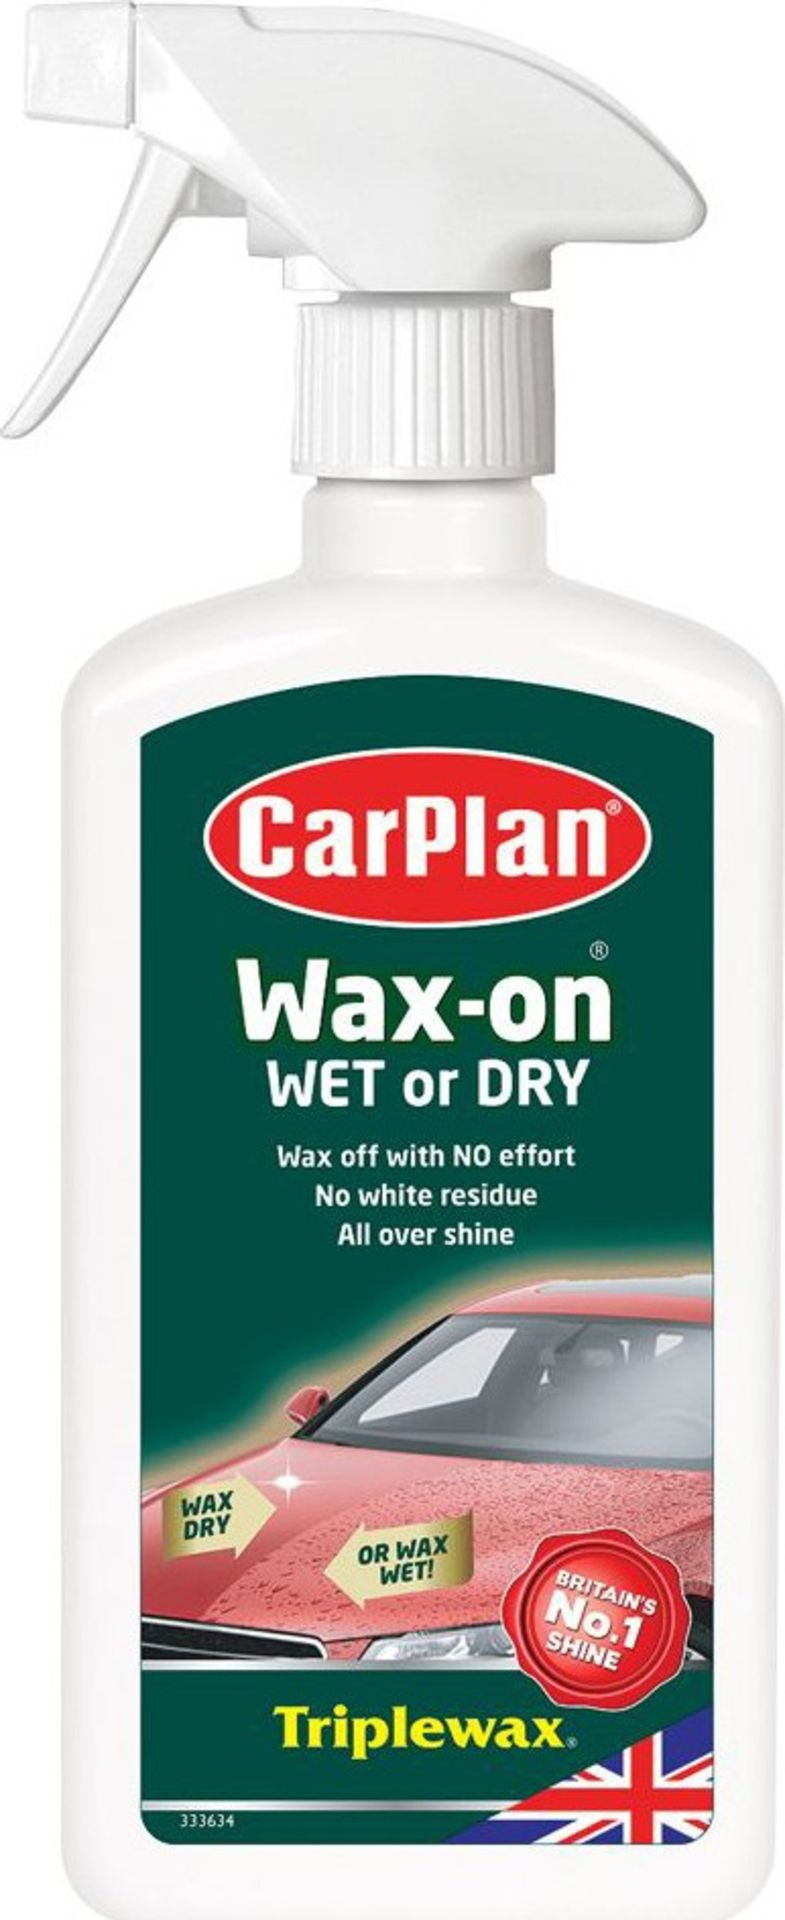 x2 New Spray Bottles Car Plan Wax On Wet Or Dry